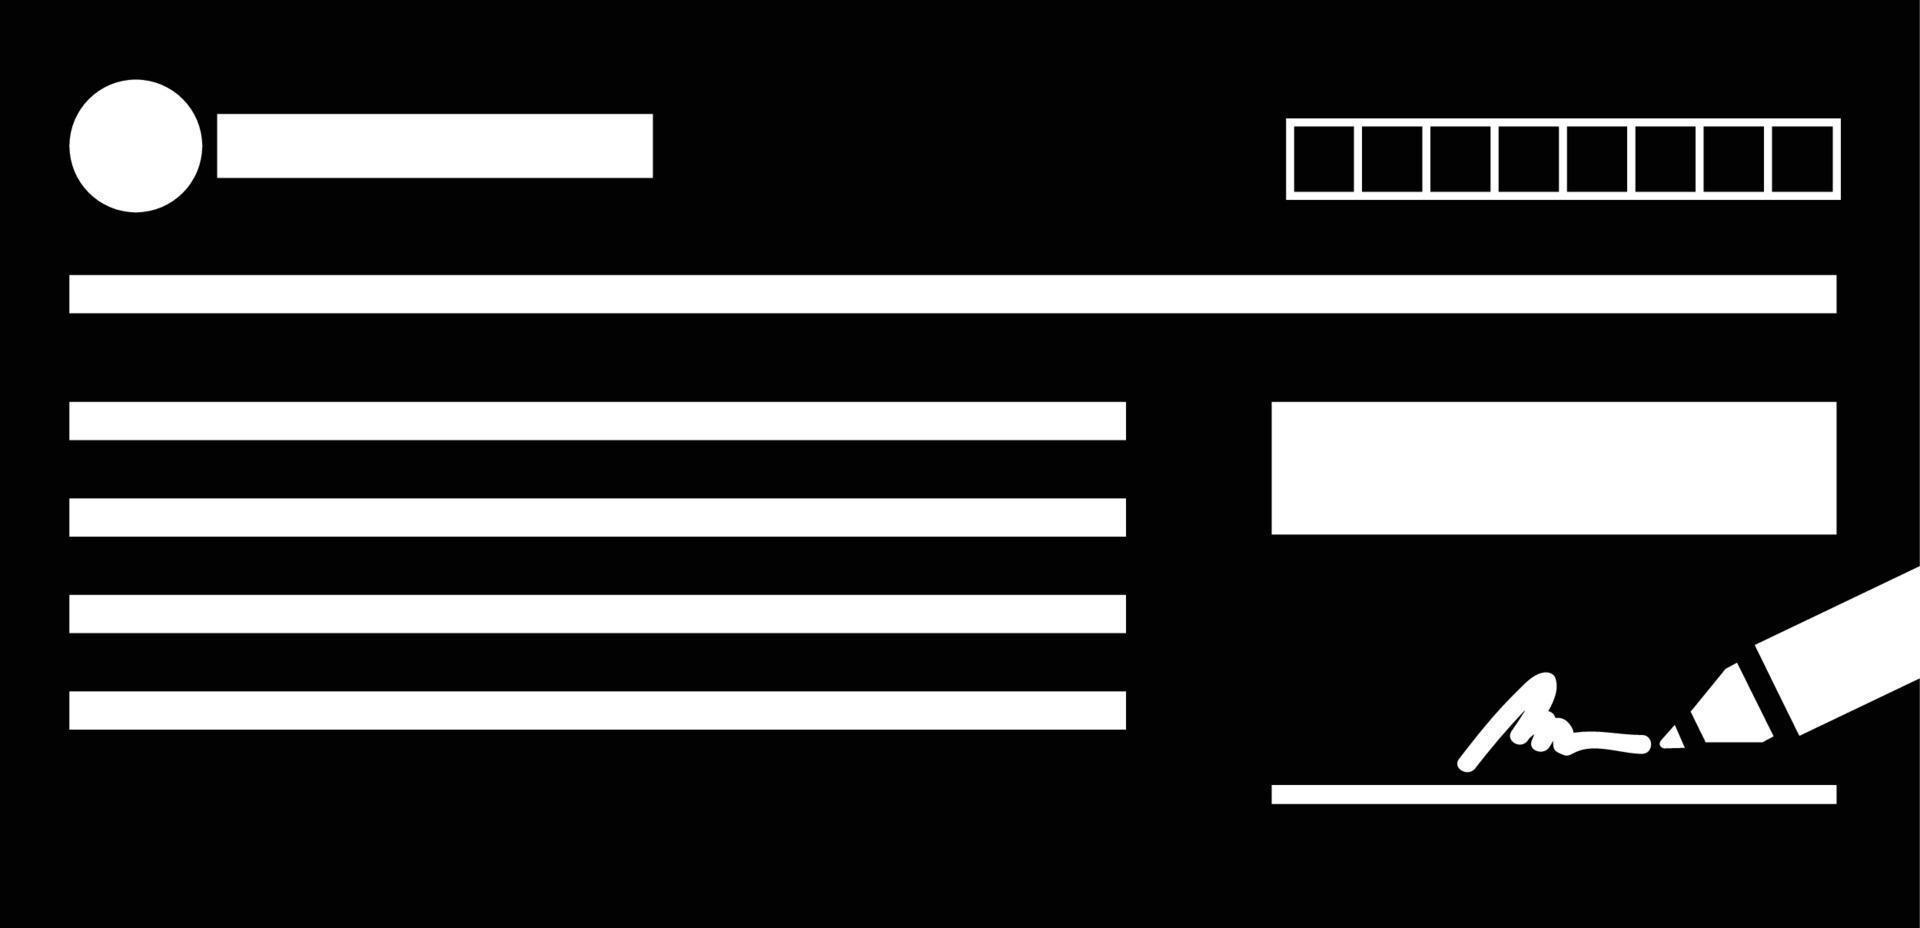 bankcheque pictogram vector